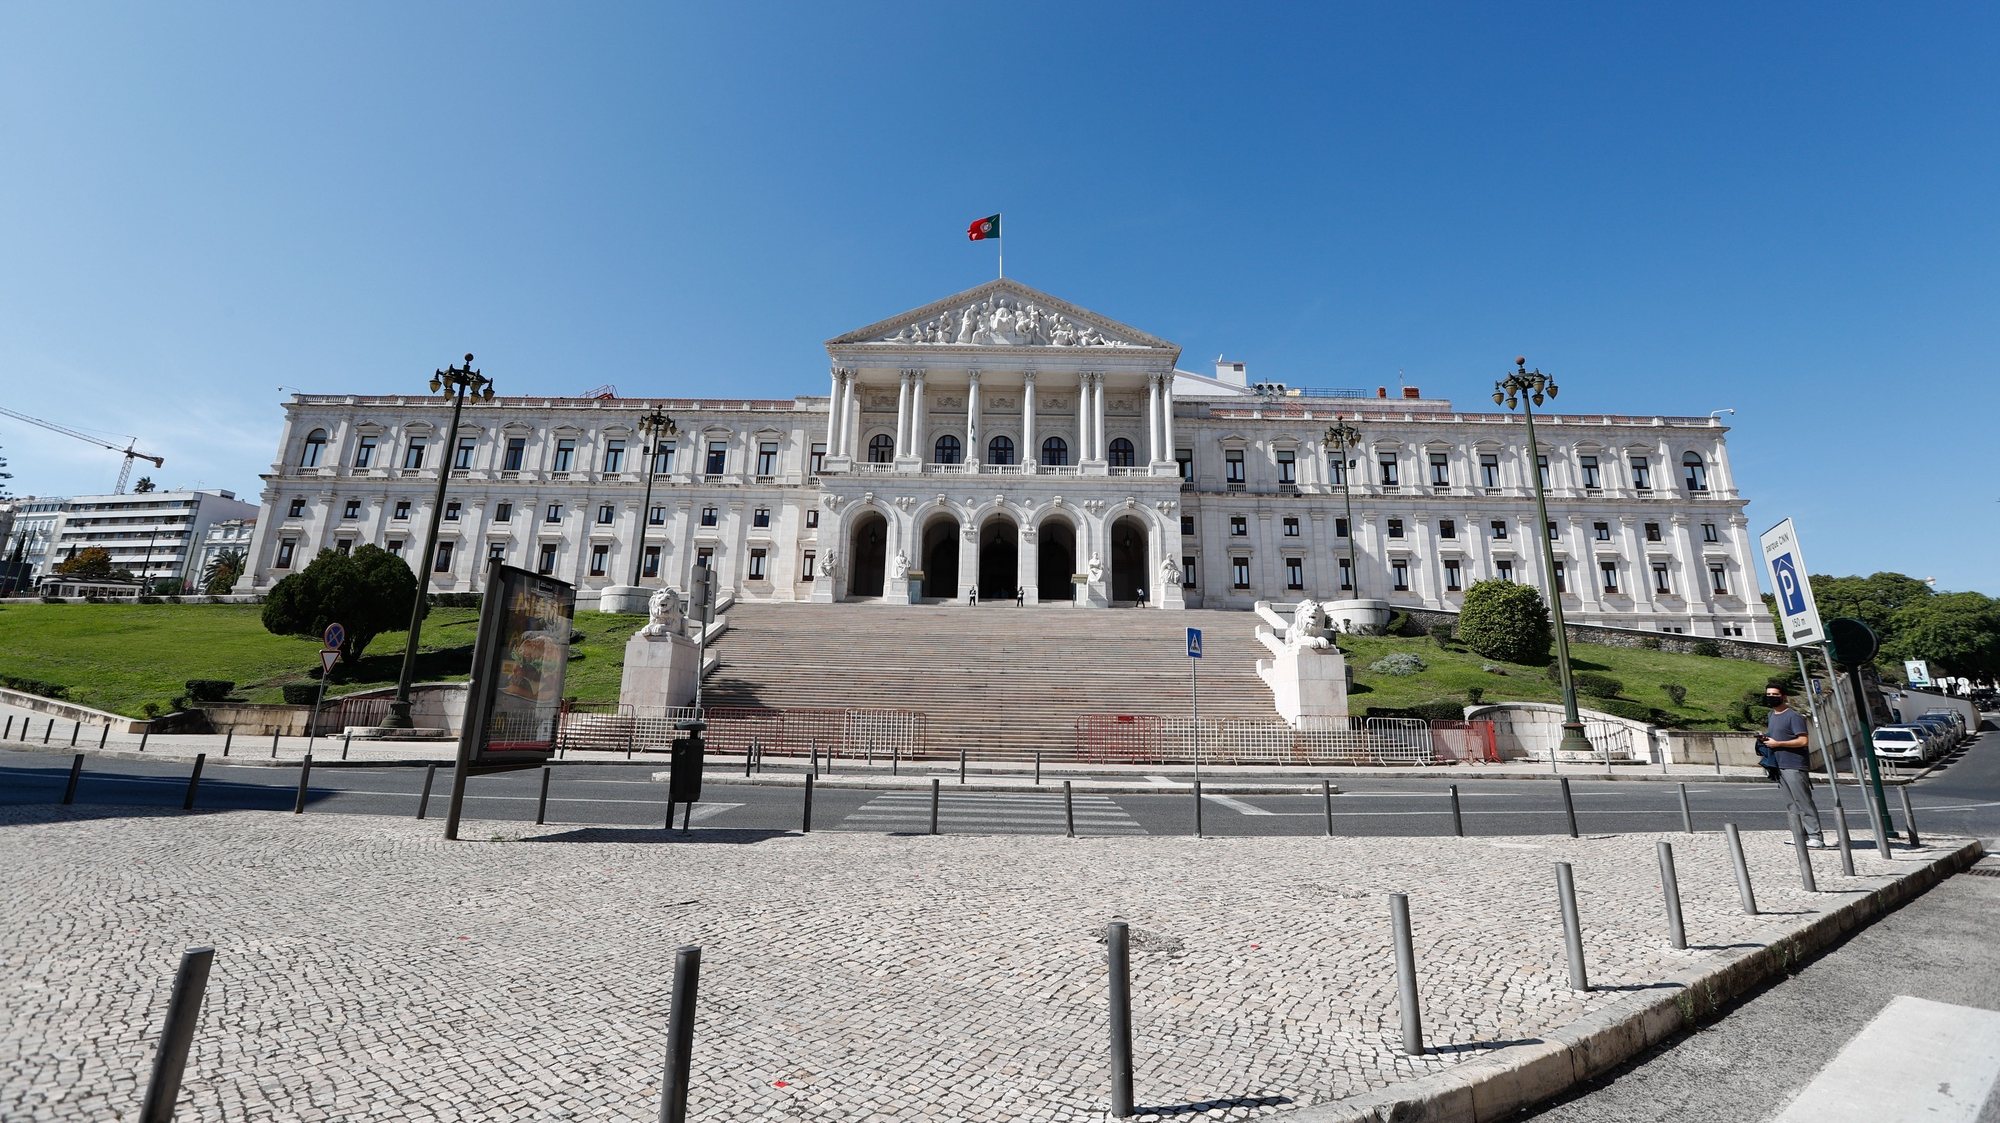 Fachada da Assembleia da República, Lisboa, 07 de outubro de 2020. ANTÓNIO COTRIM/LUSA